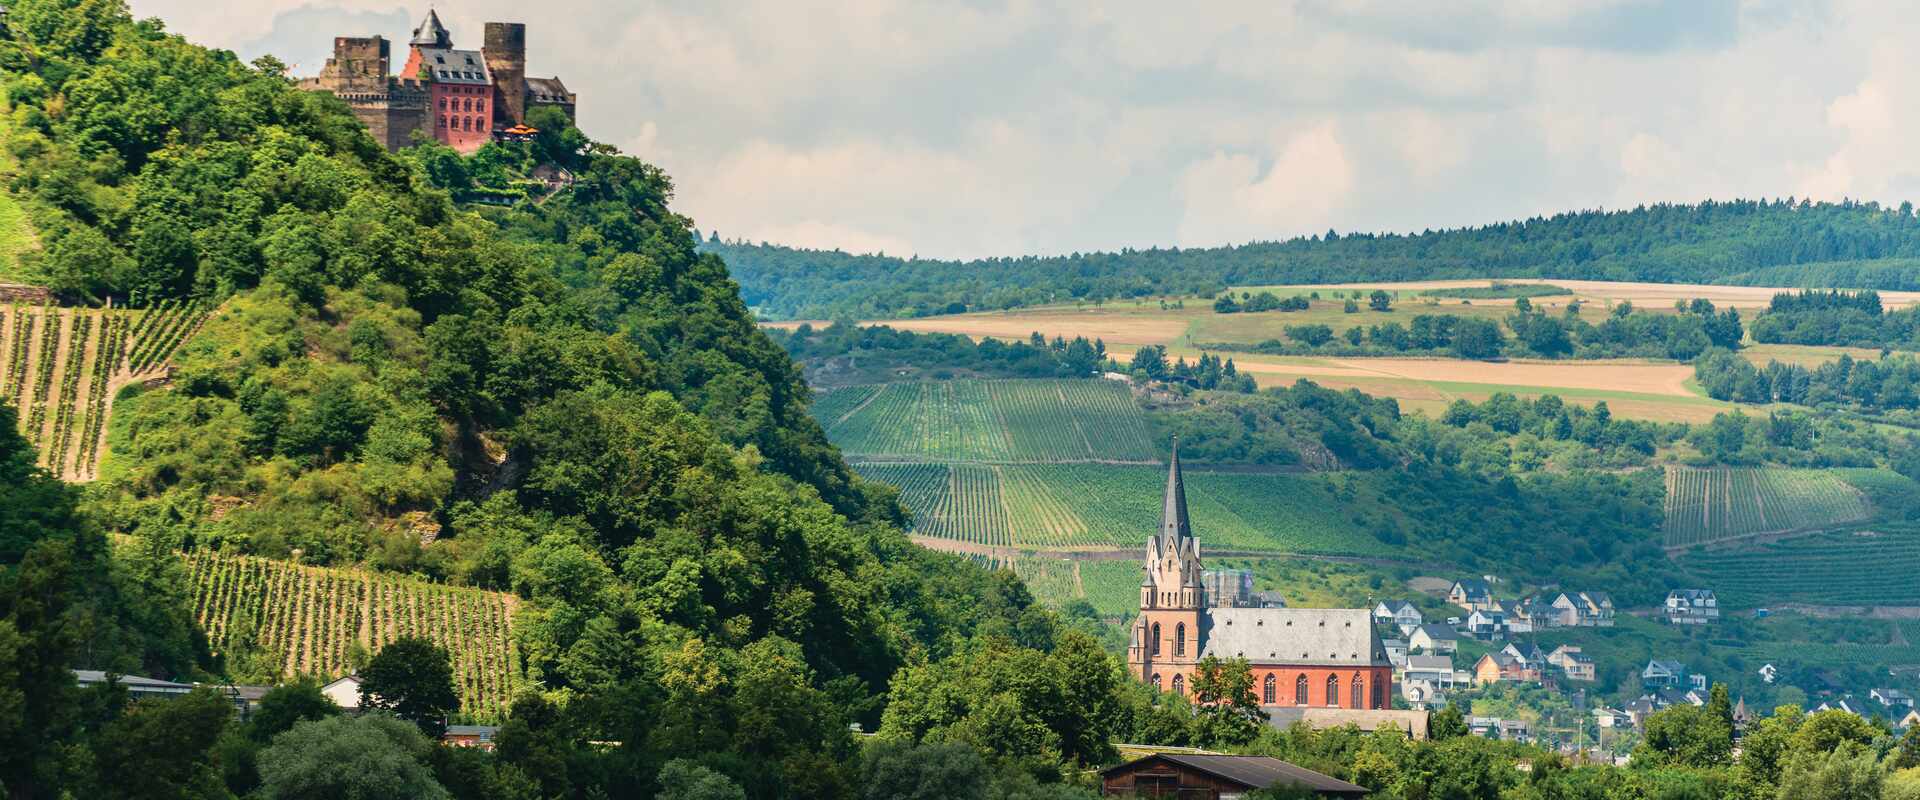 Verdant green hills in the Rhine Valley